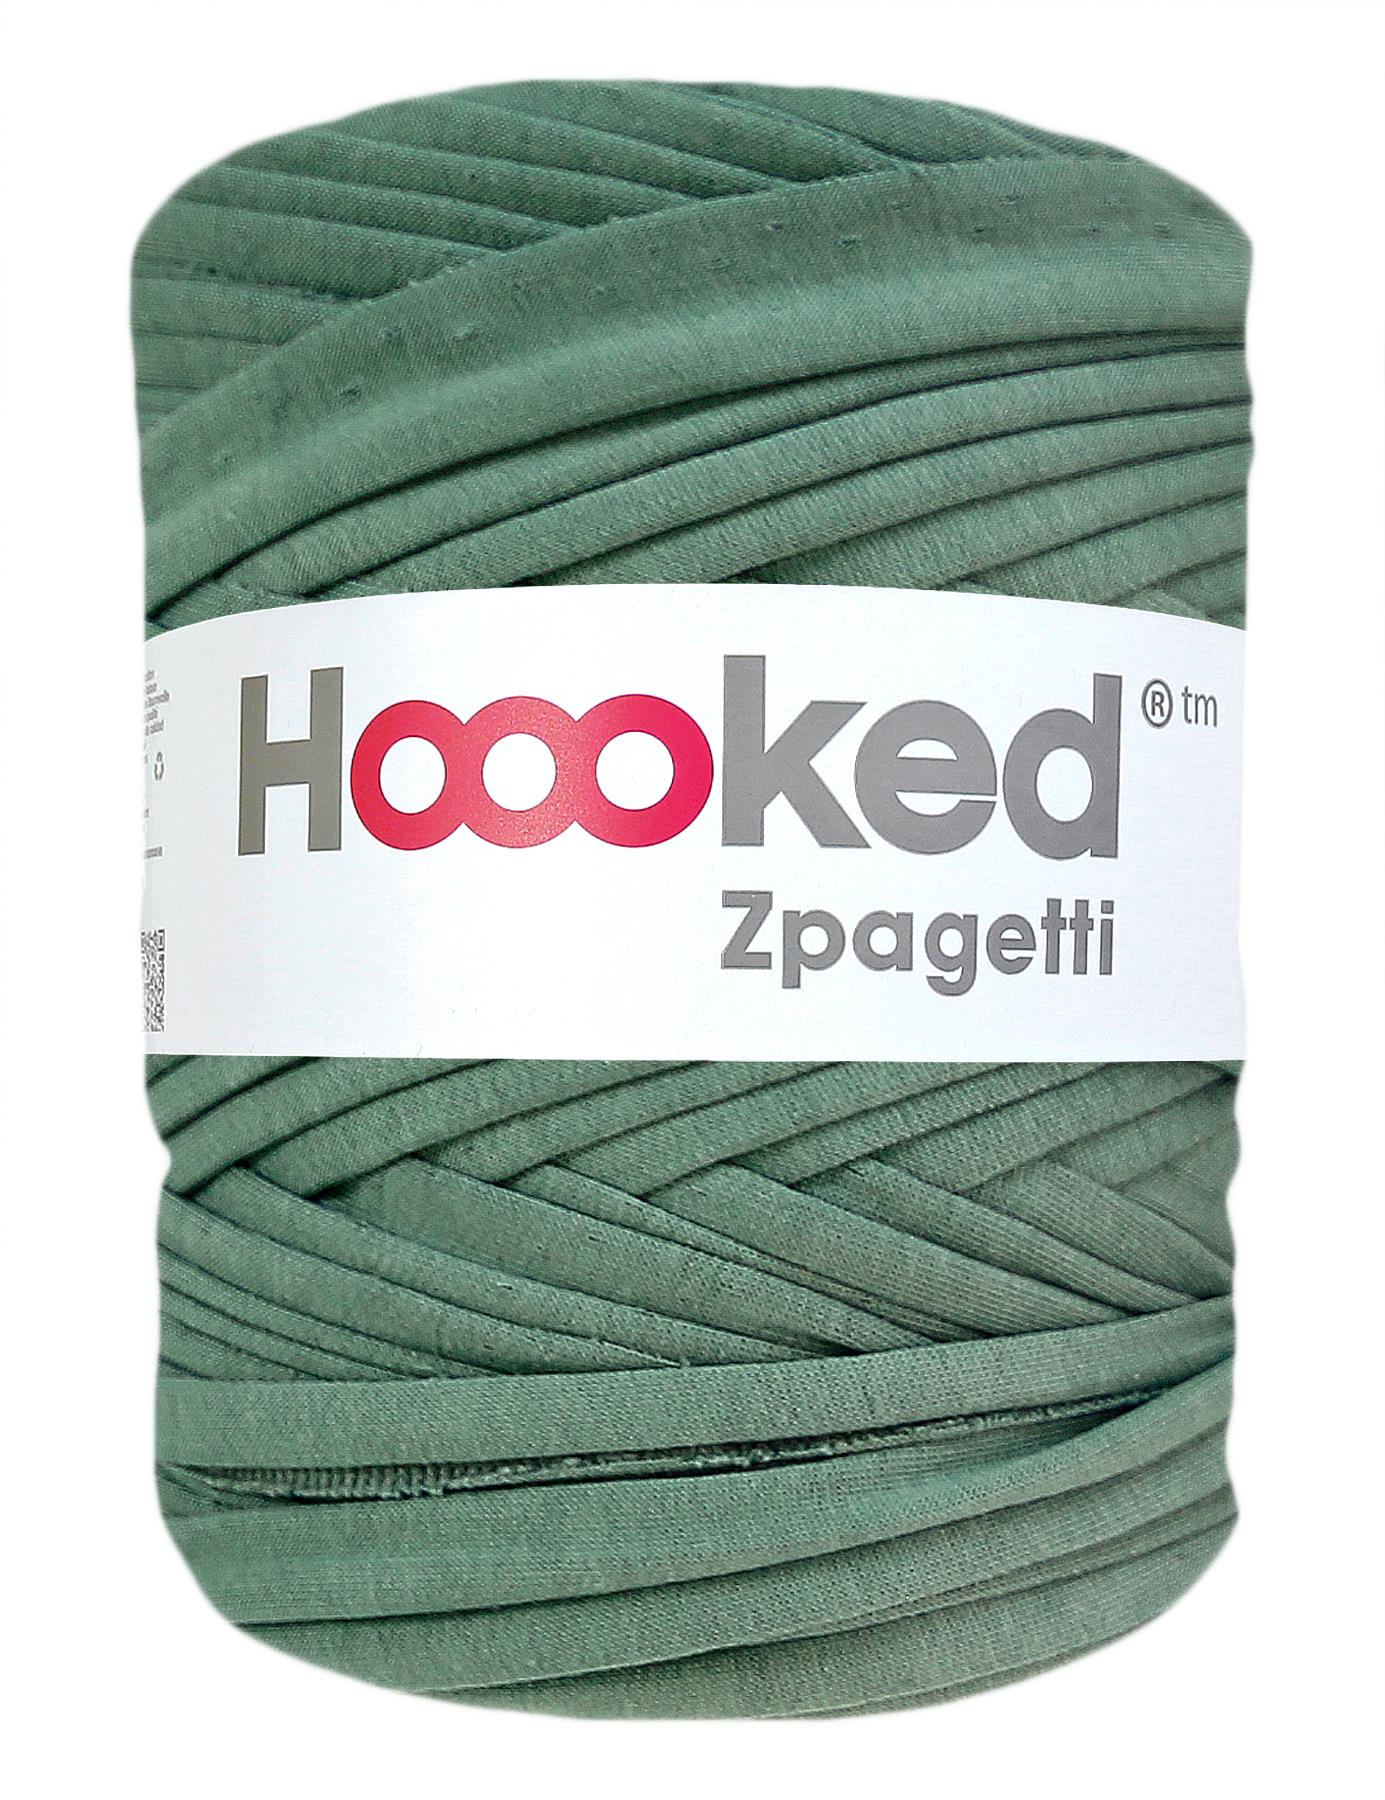 Dark sage green t-shirt yarn by Hoooked Zpagetti (100-120m)